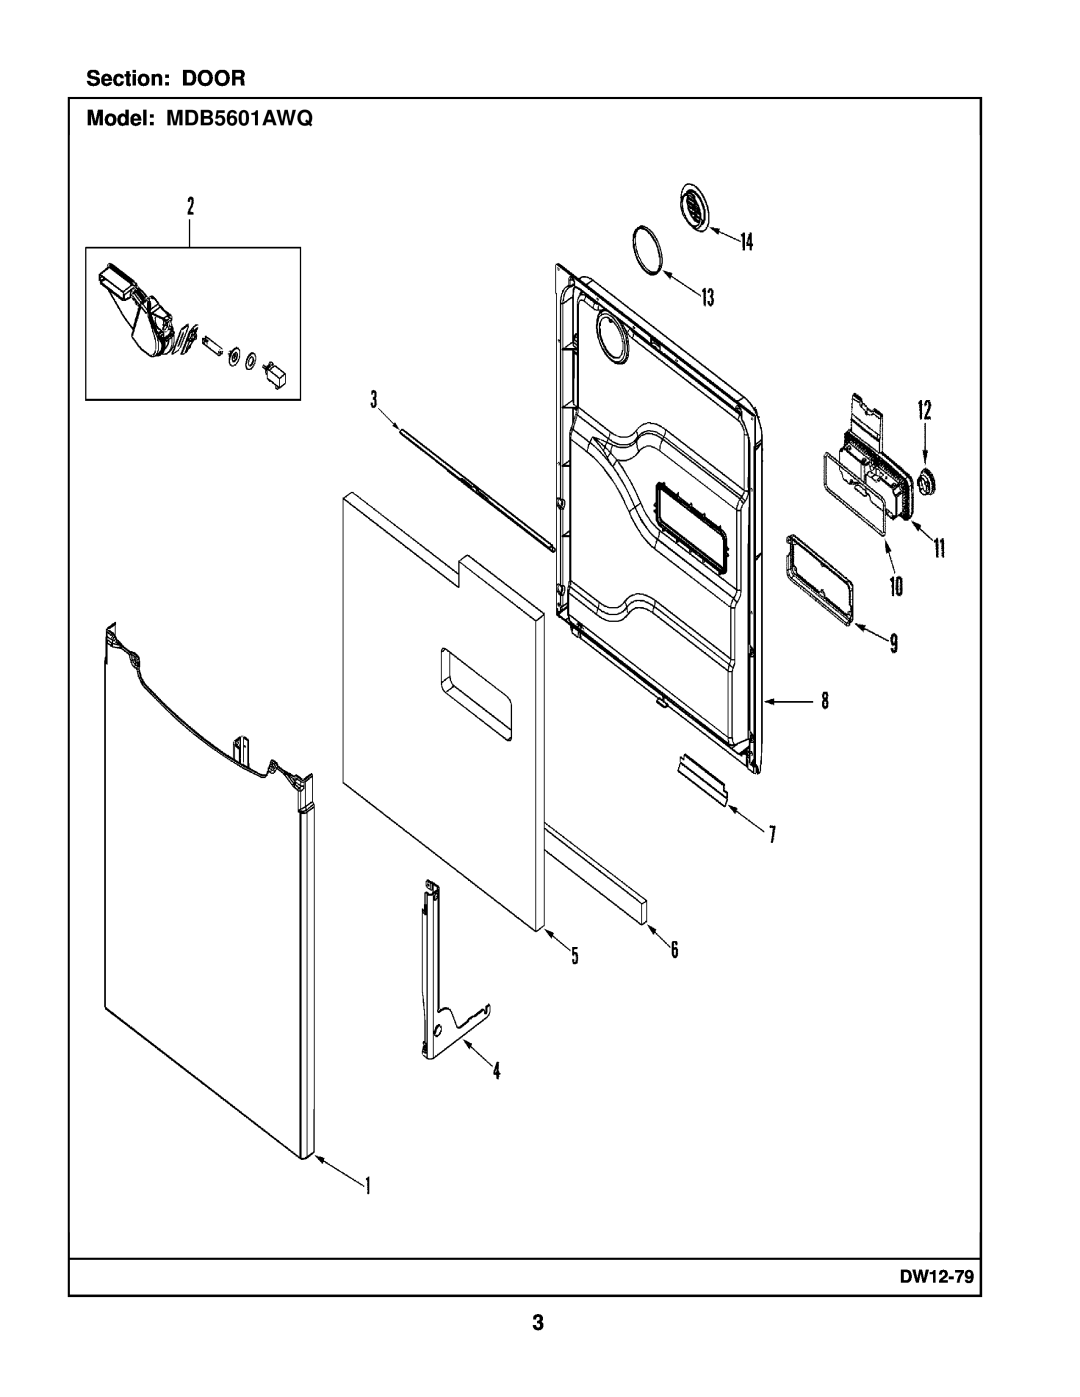 Maytag manual Section DOOR Model MDB5601AWQ, DW12-79 